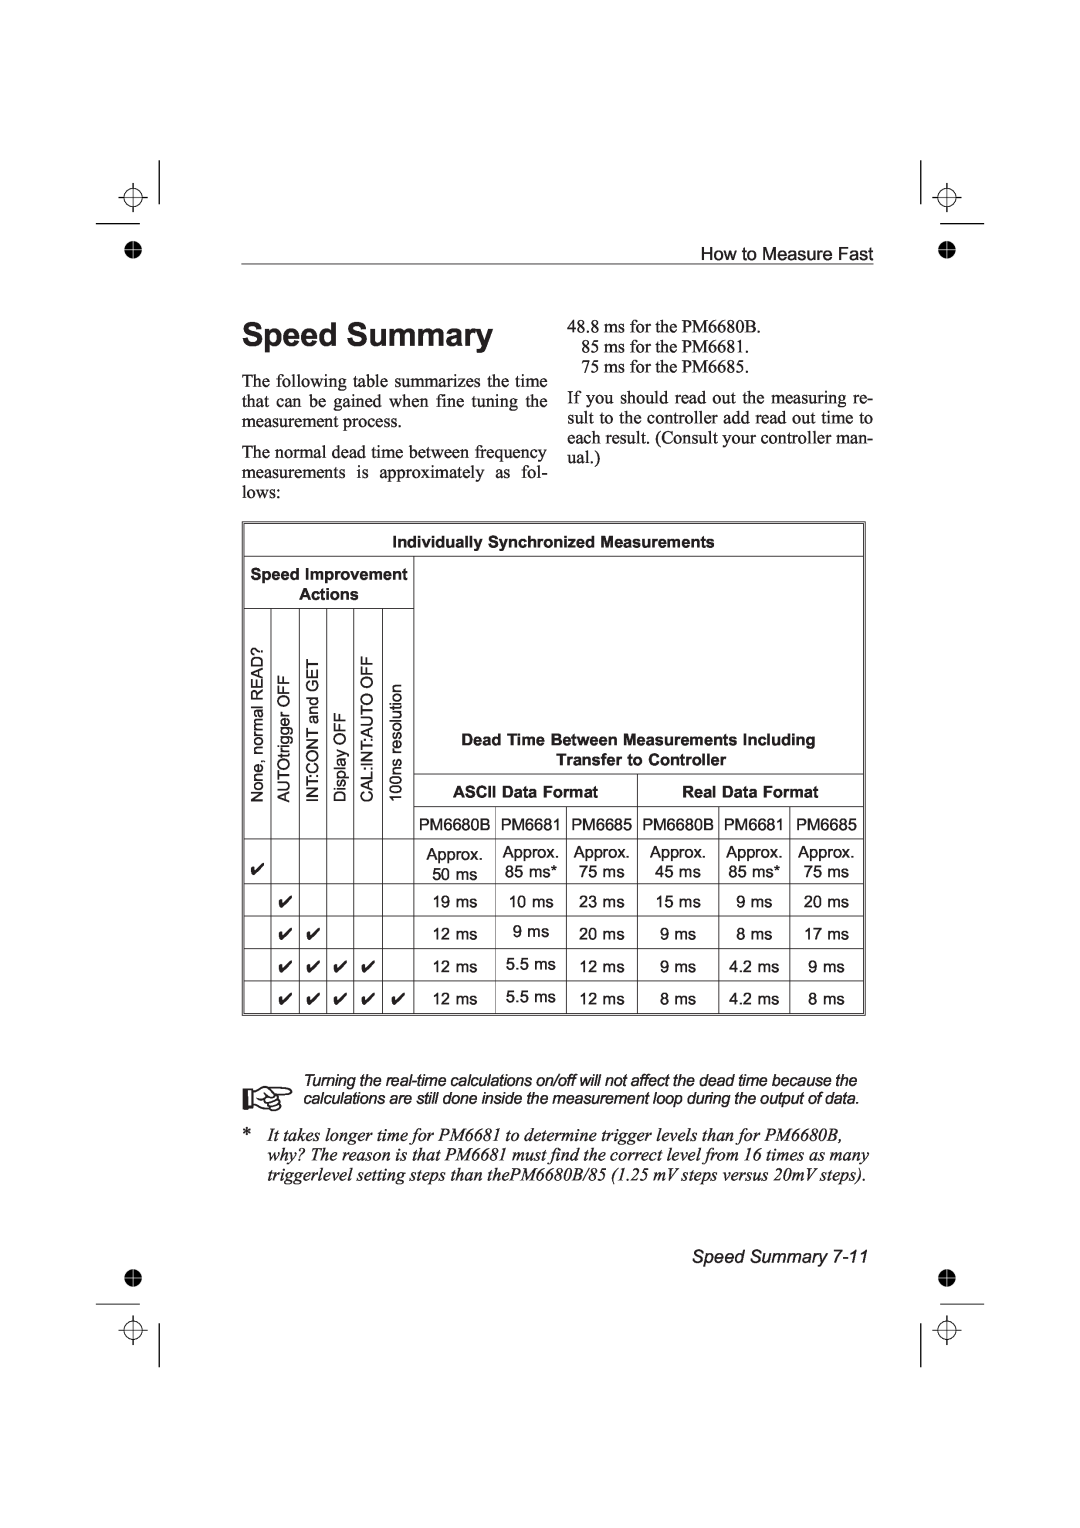 Fluke PM6681R, PM6685R manual Speed Summary 